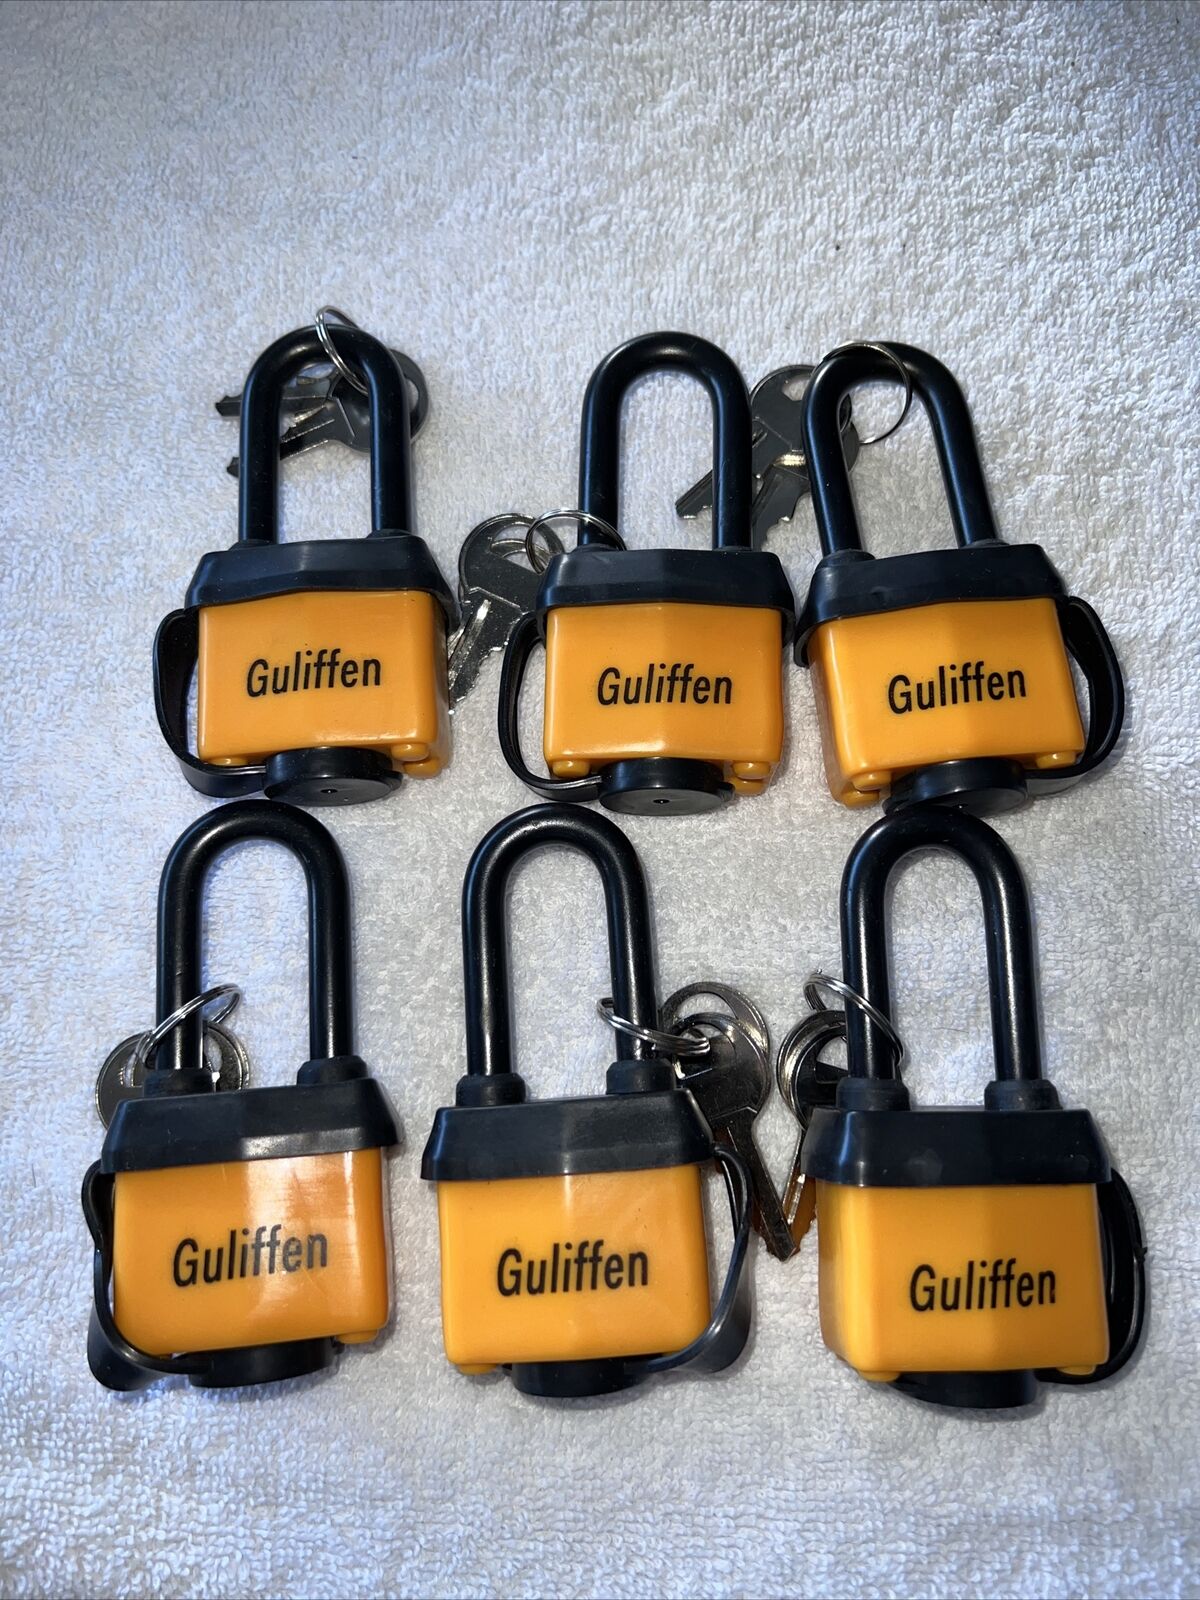 Weatherproof Laminated Steel Locks with Keys,6 Pack Padlocks with Same Key for O